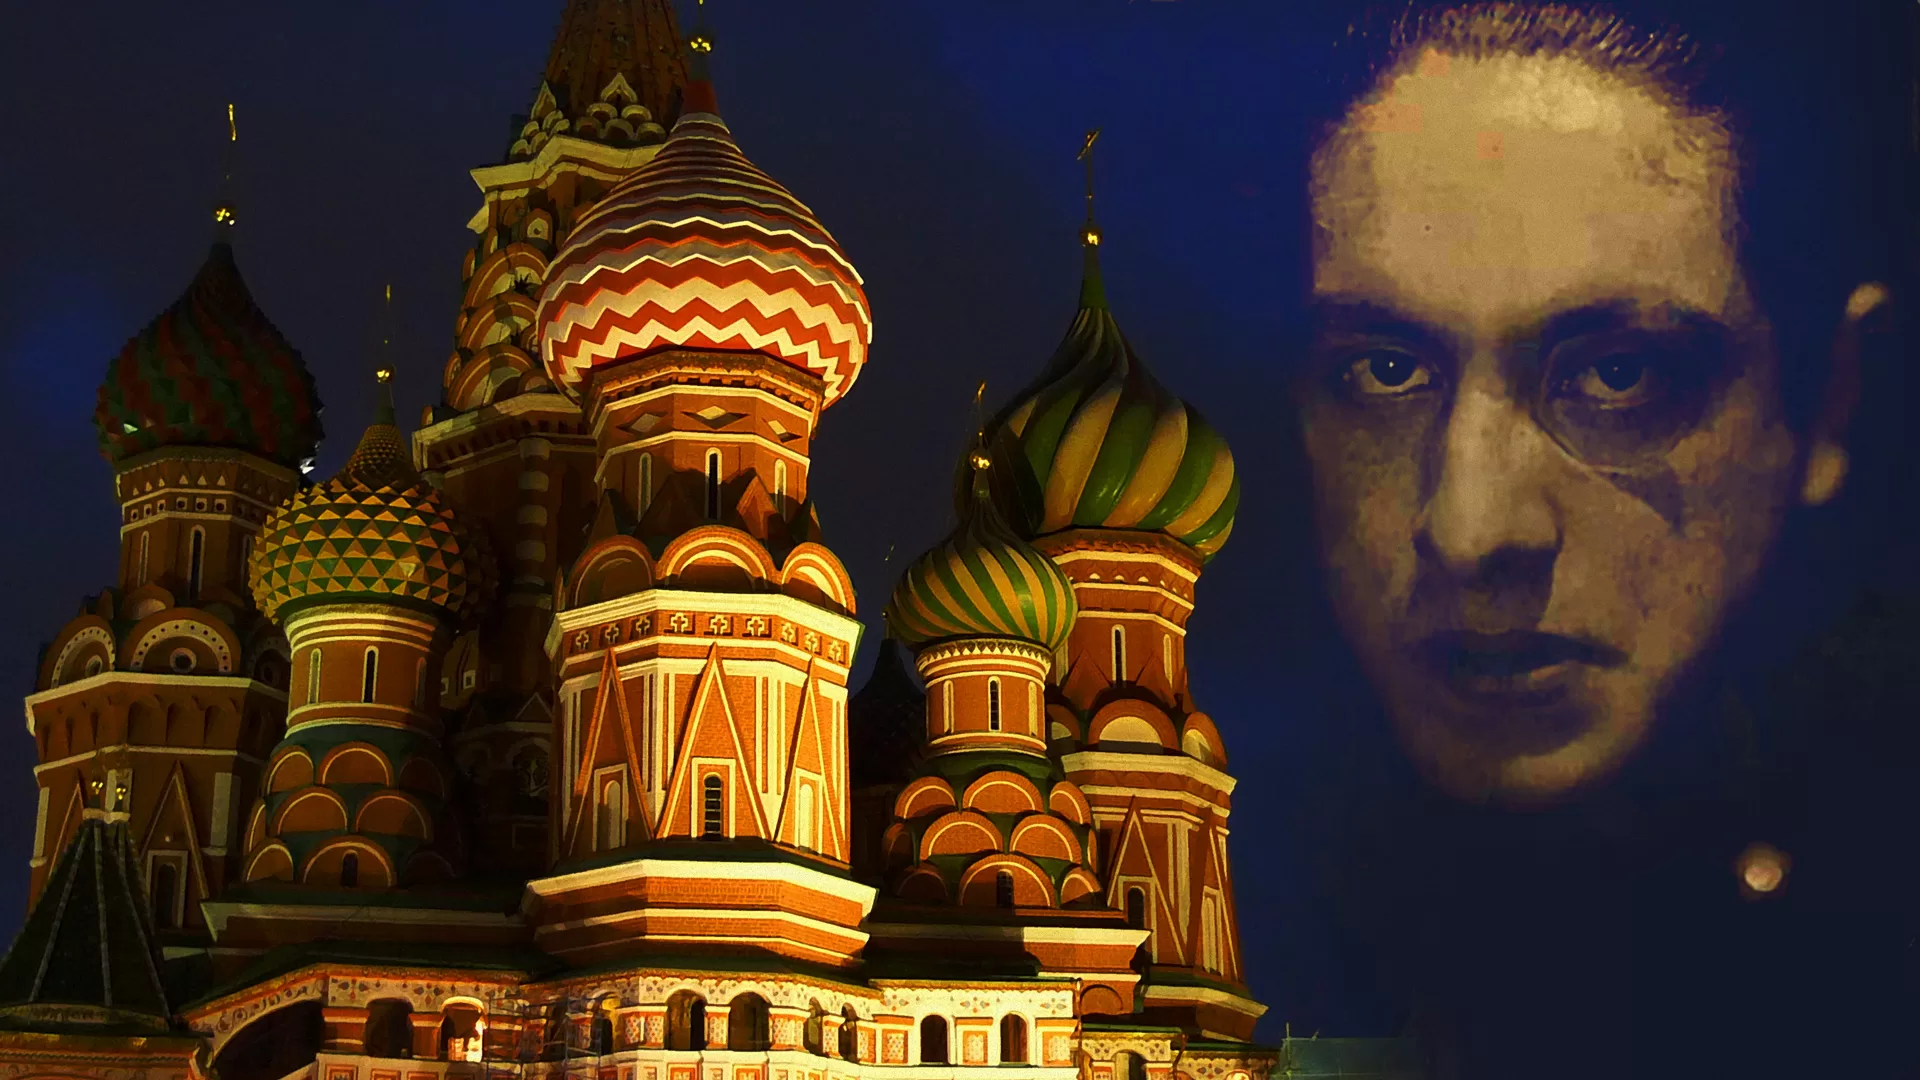 Studying Julius Evola in Russia